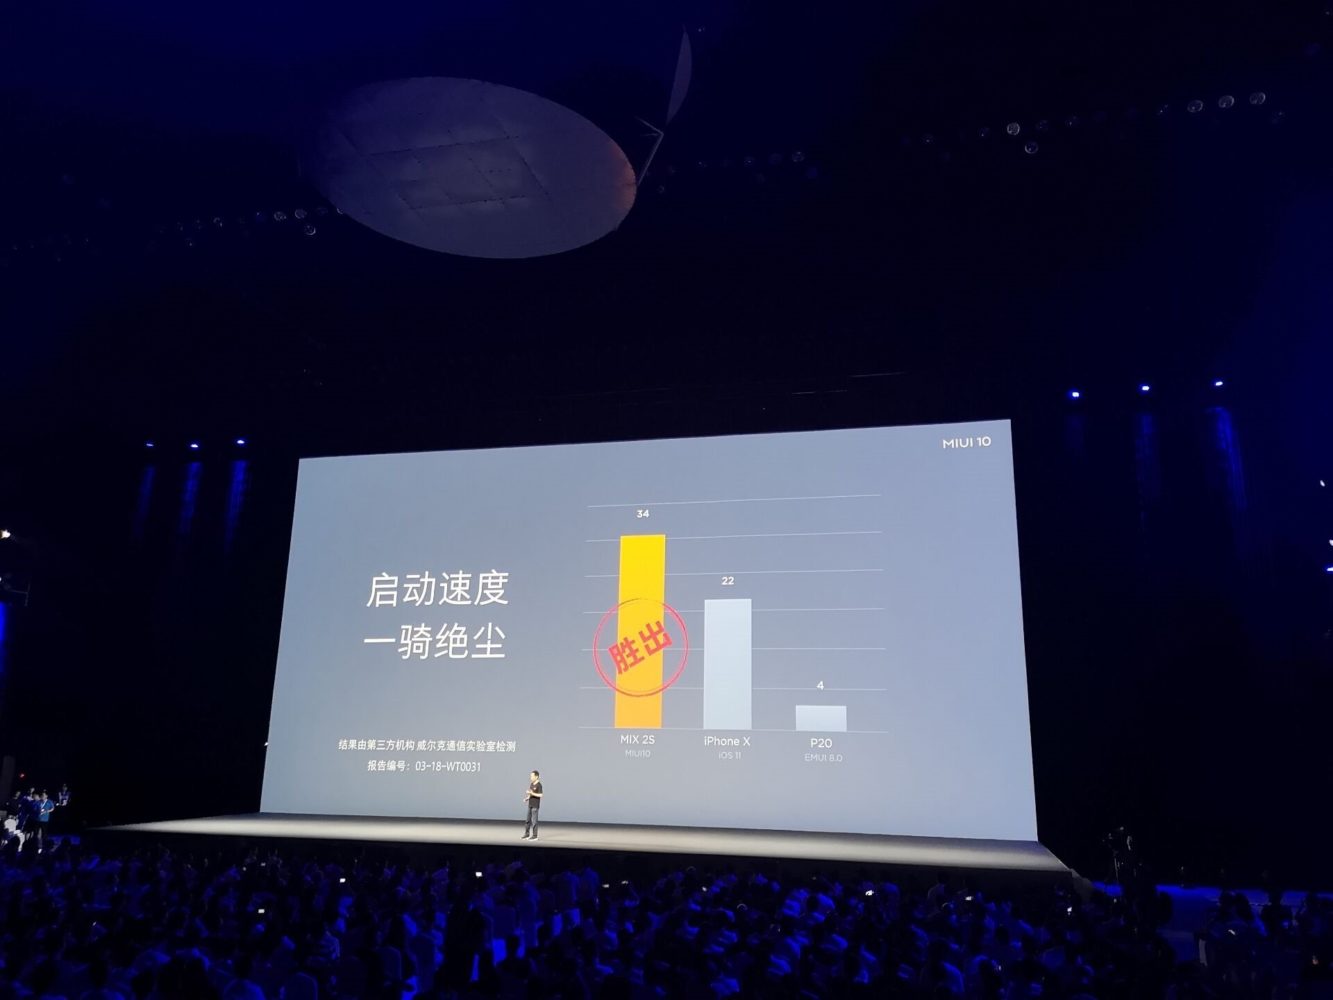 Xiaomi Mi MIX 2S vs iPhone X vs Huawei P20 Speed Test (Boot Time) Comparison